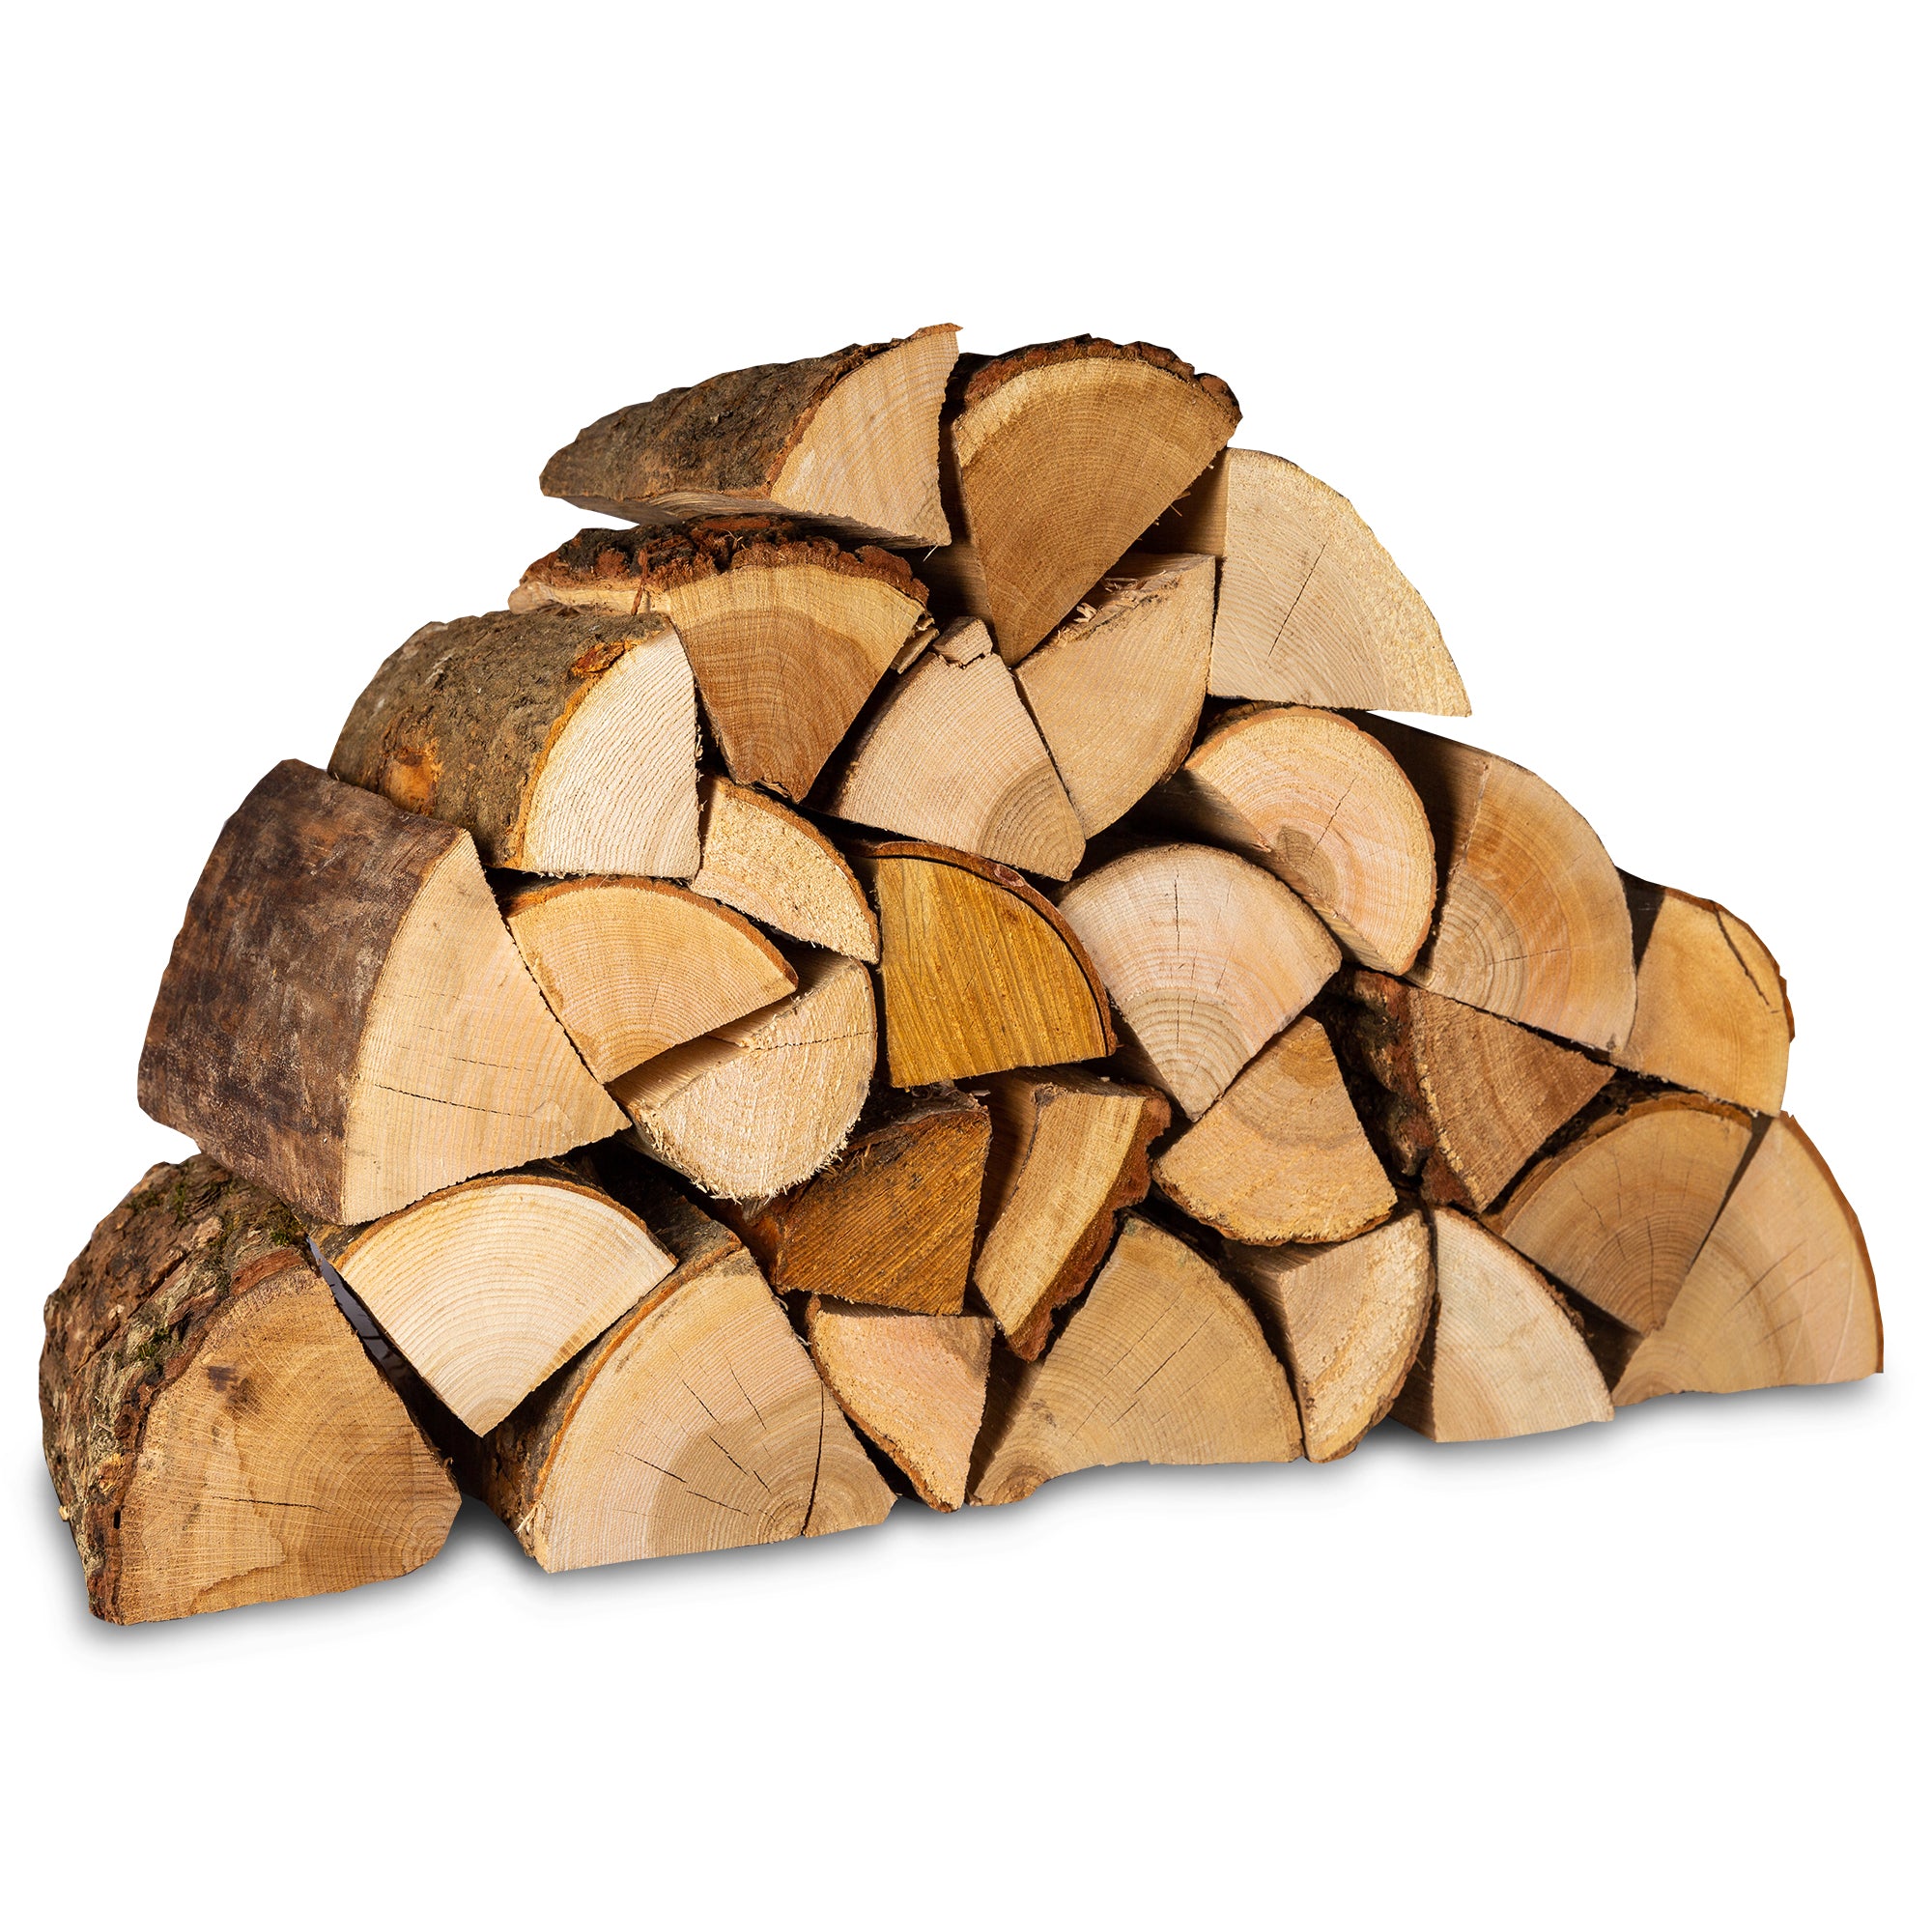 Kiln dried hardwood logs for wood burner, stove, fireplace